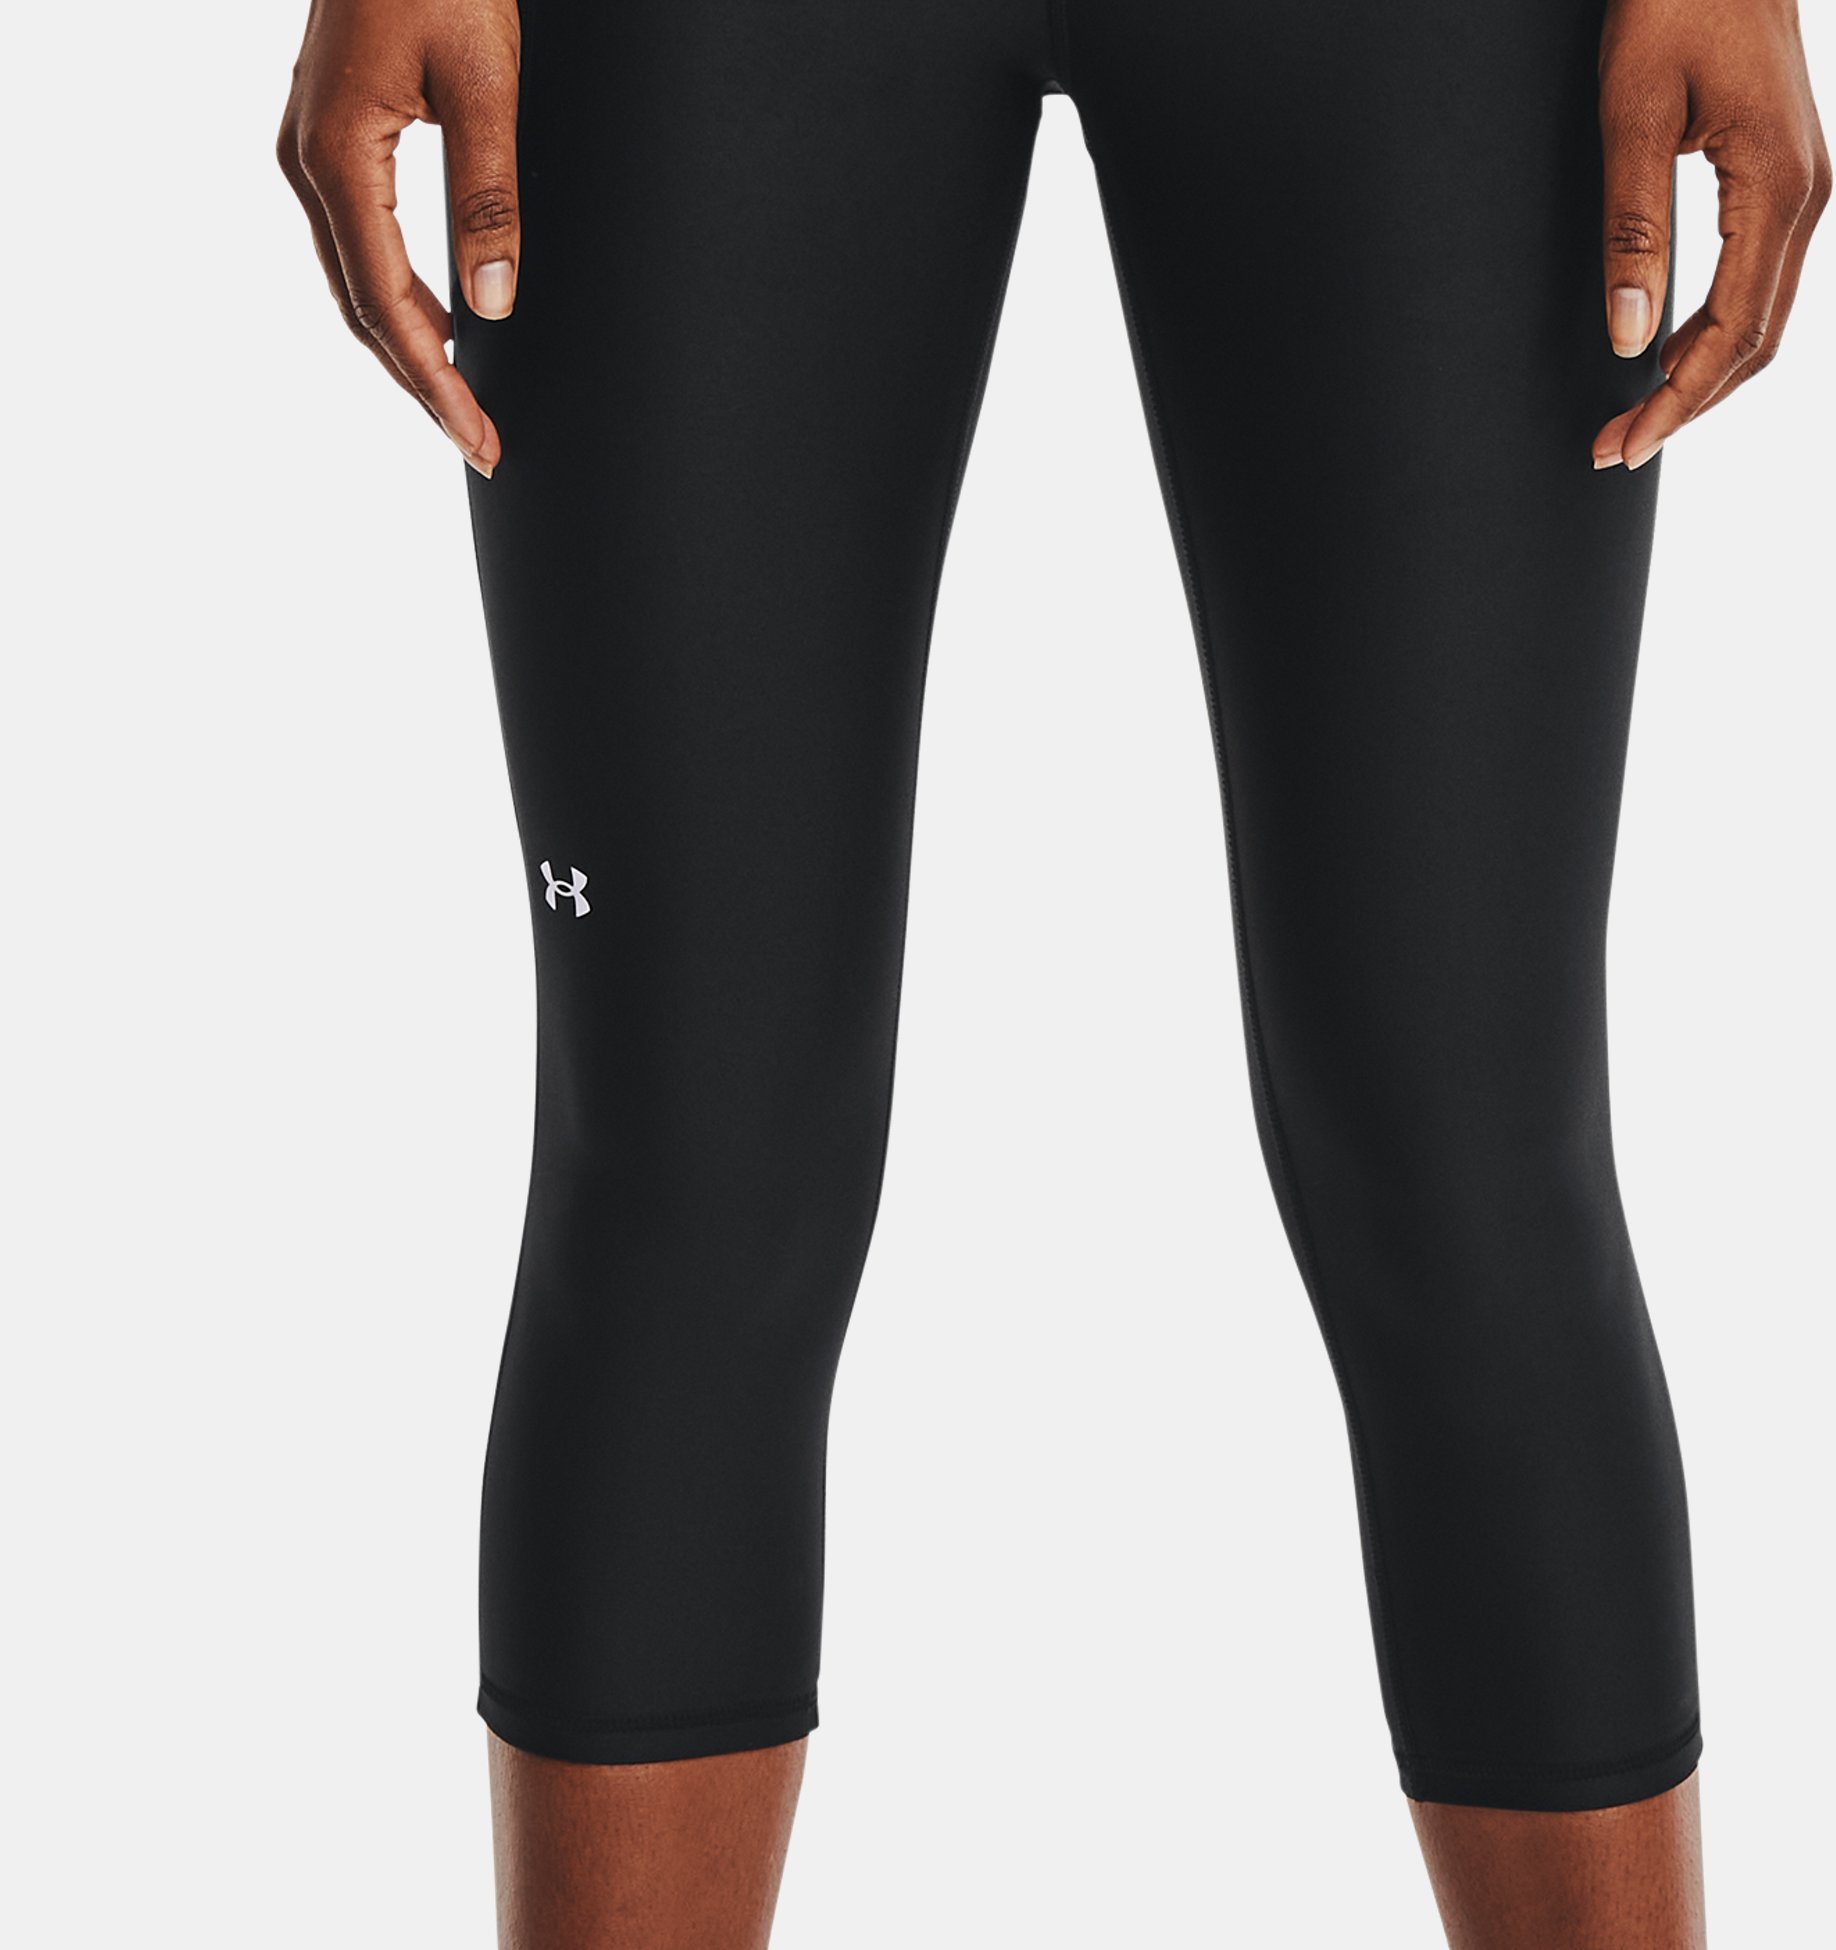 Nike Women's Power Pocket Hyper Dri-Fit Training Capris Tights Black Small